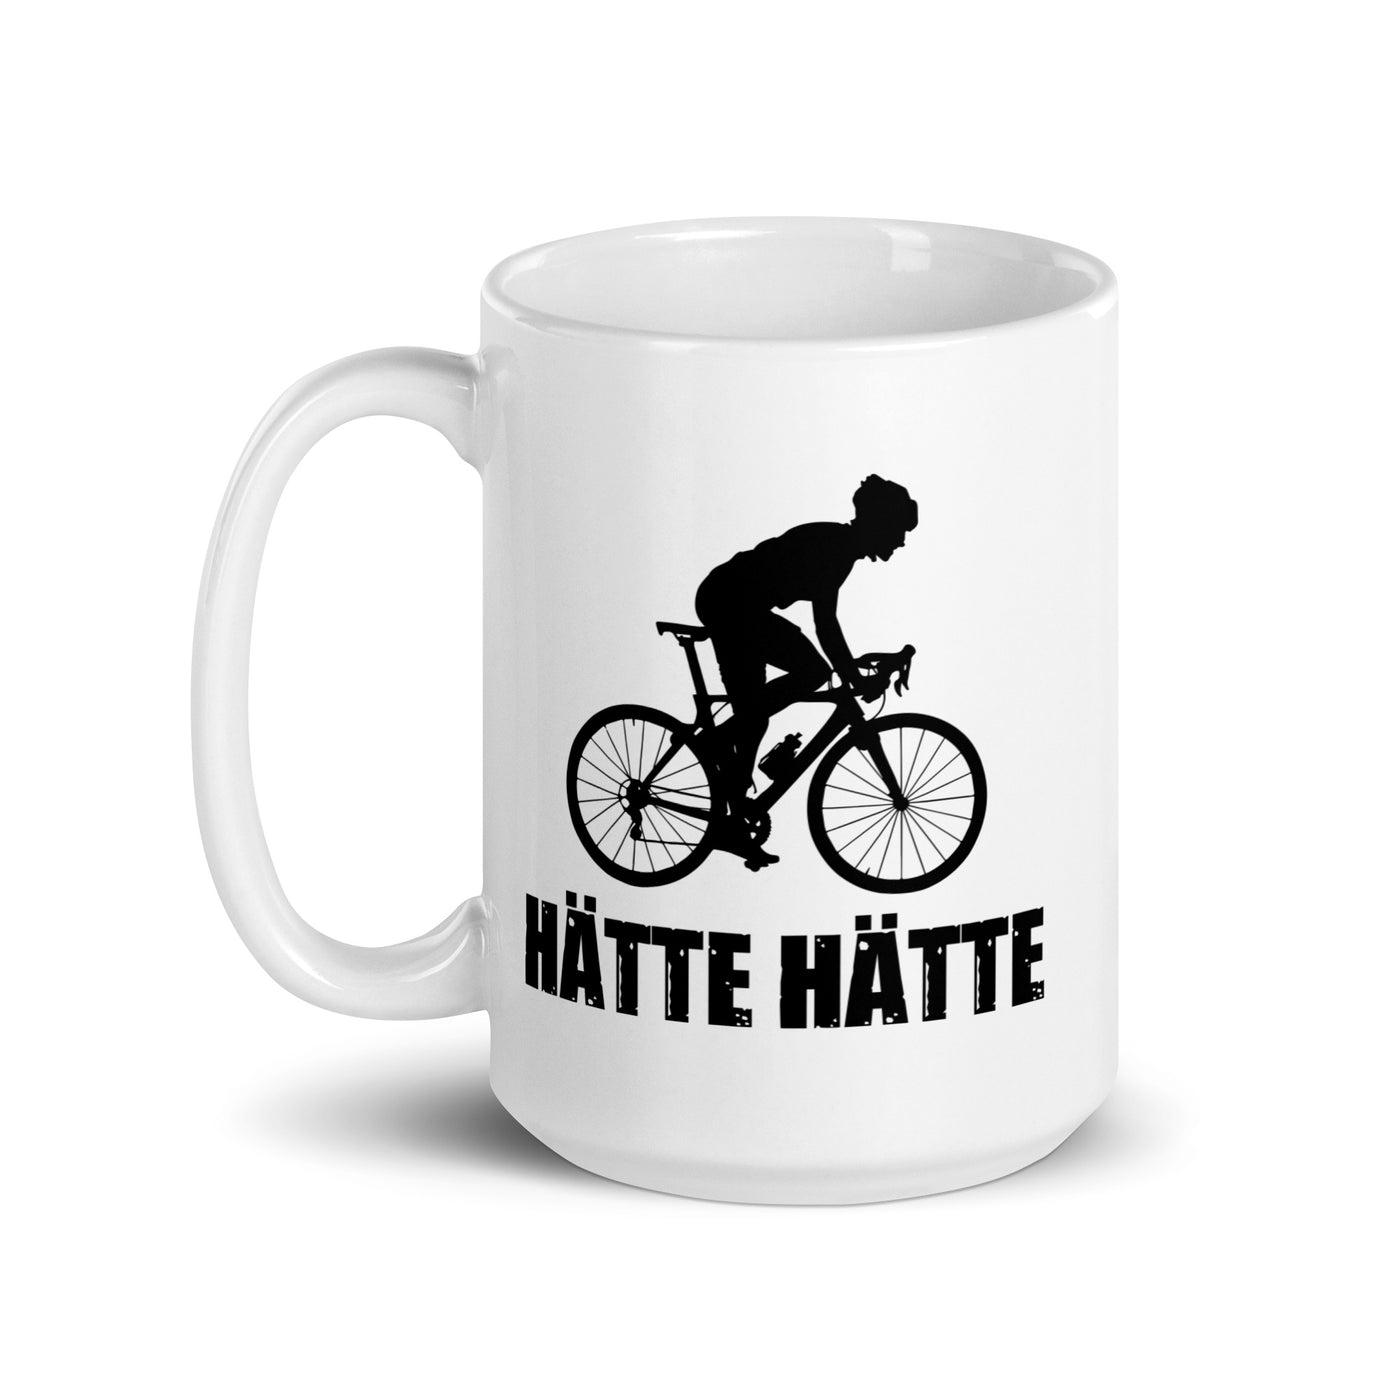 Hatte Hatte 2 - Tasse fahrrad